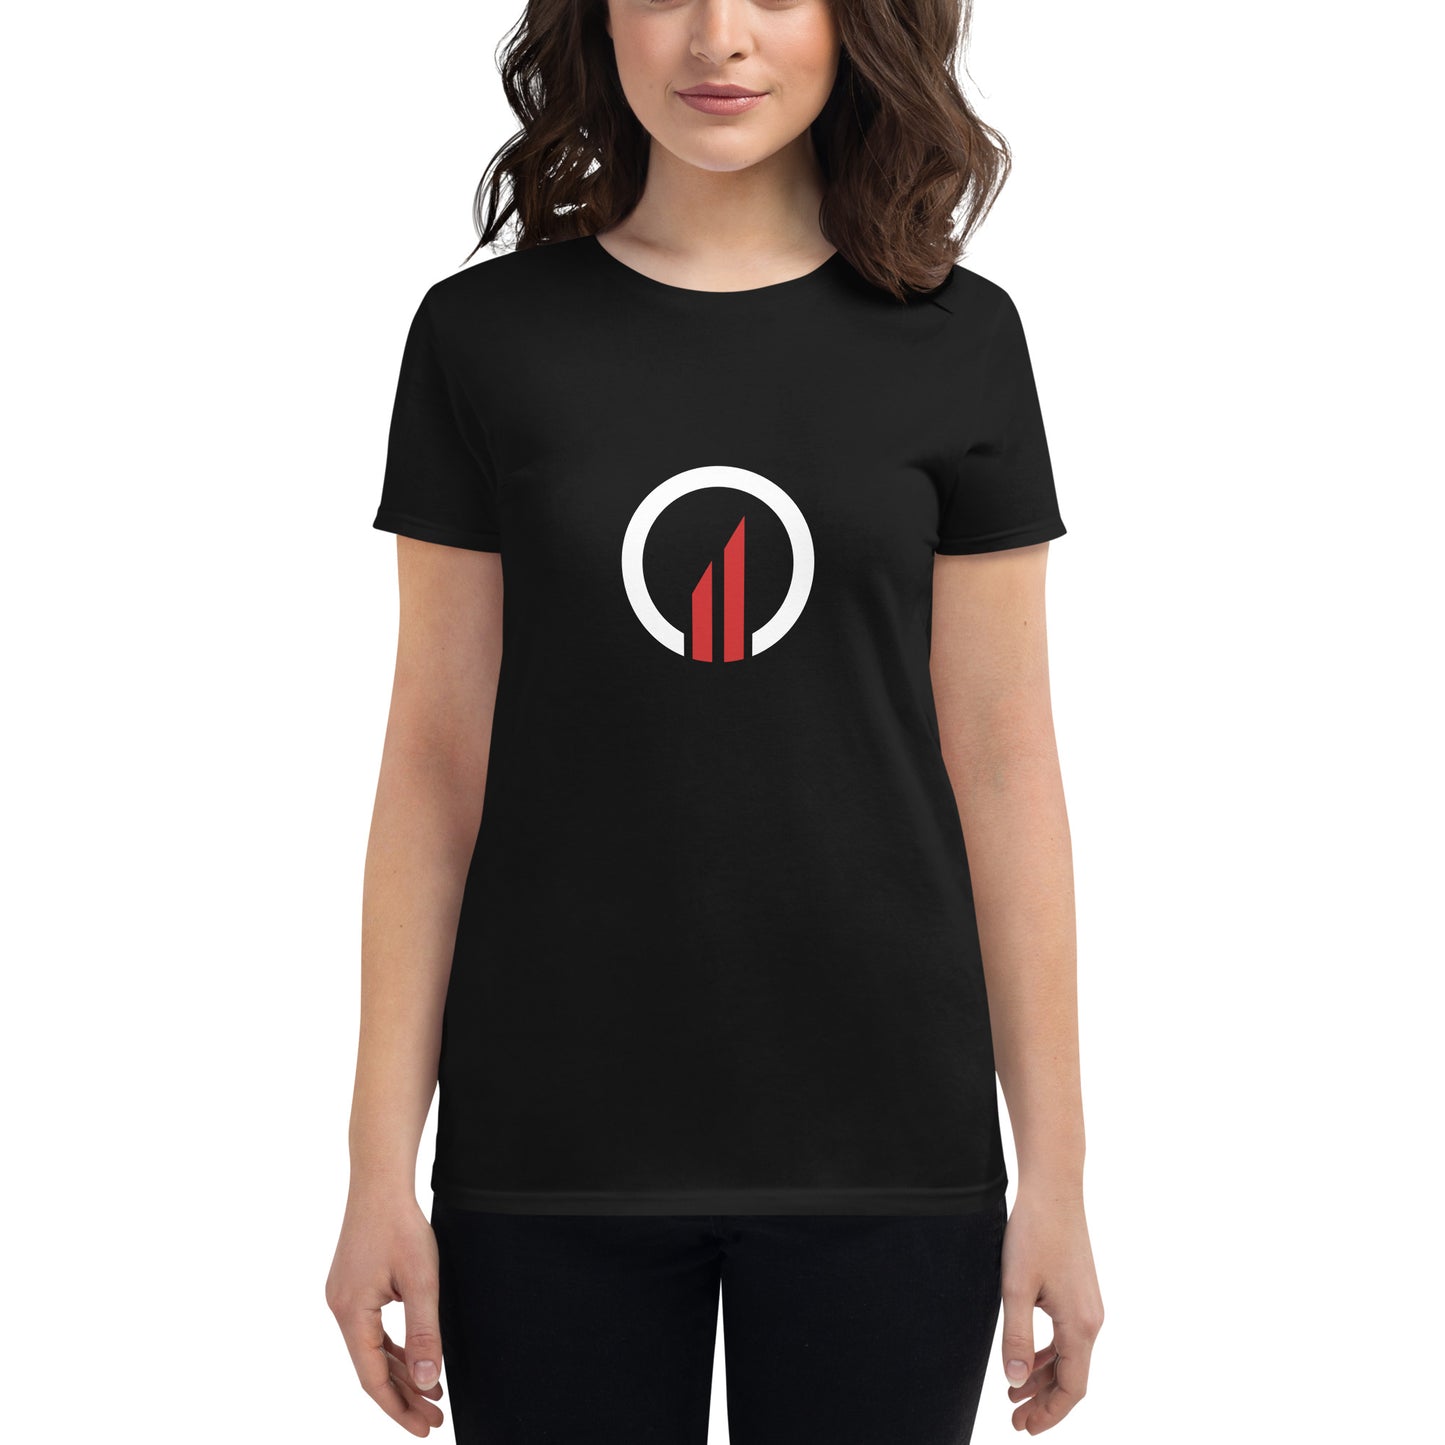 Optimizer Standard Fashion Fit Tee - Front Emblem only (Women)